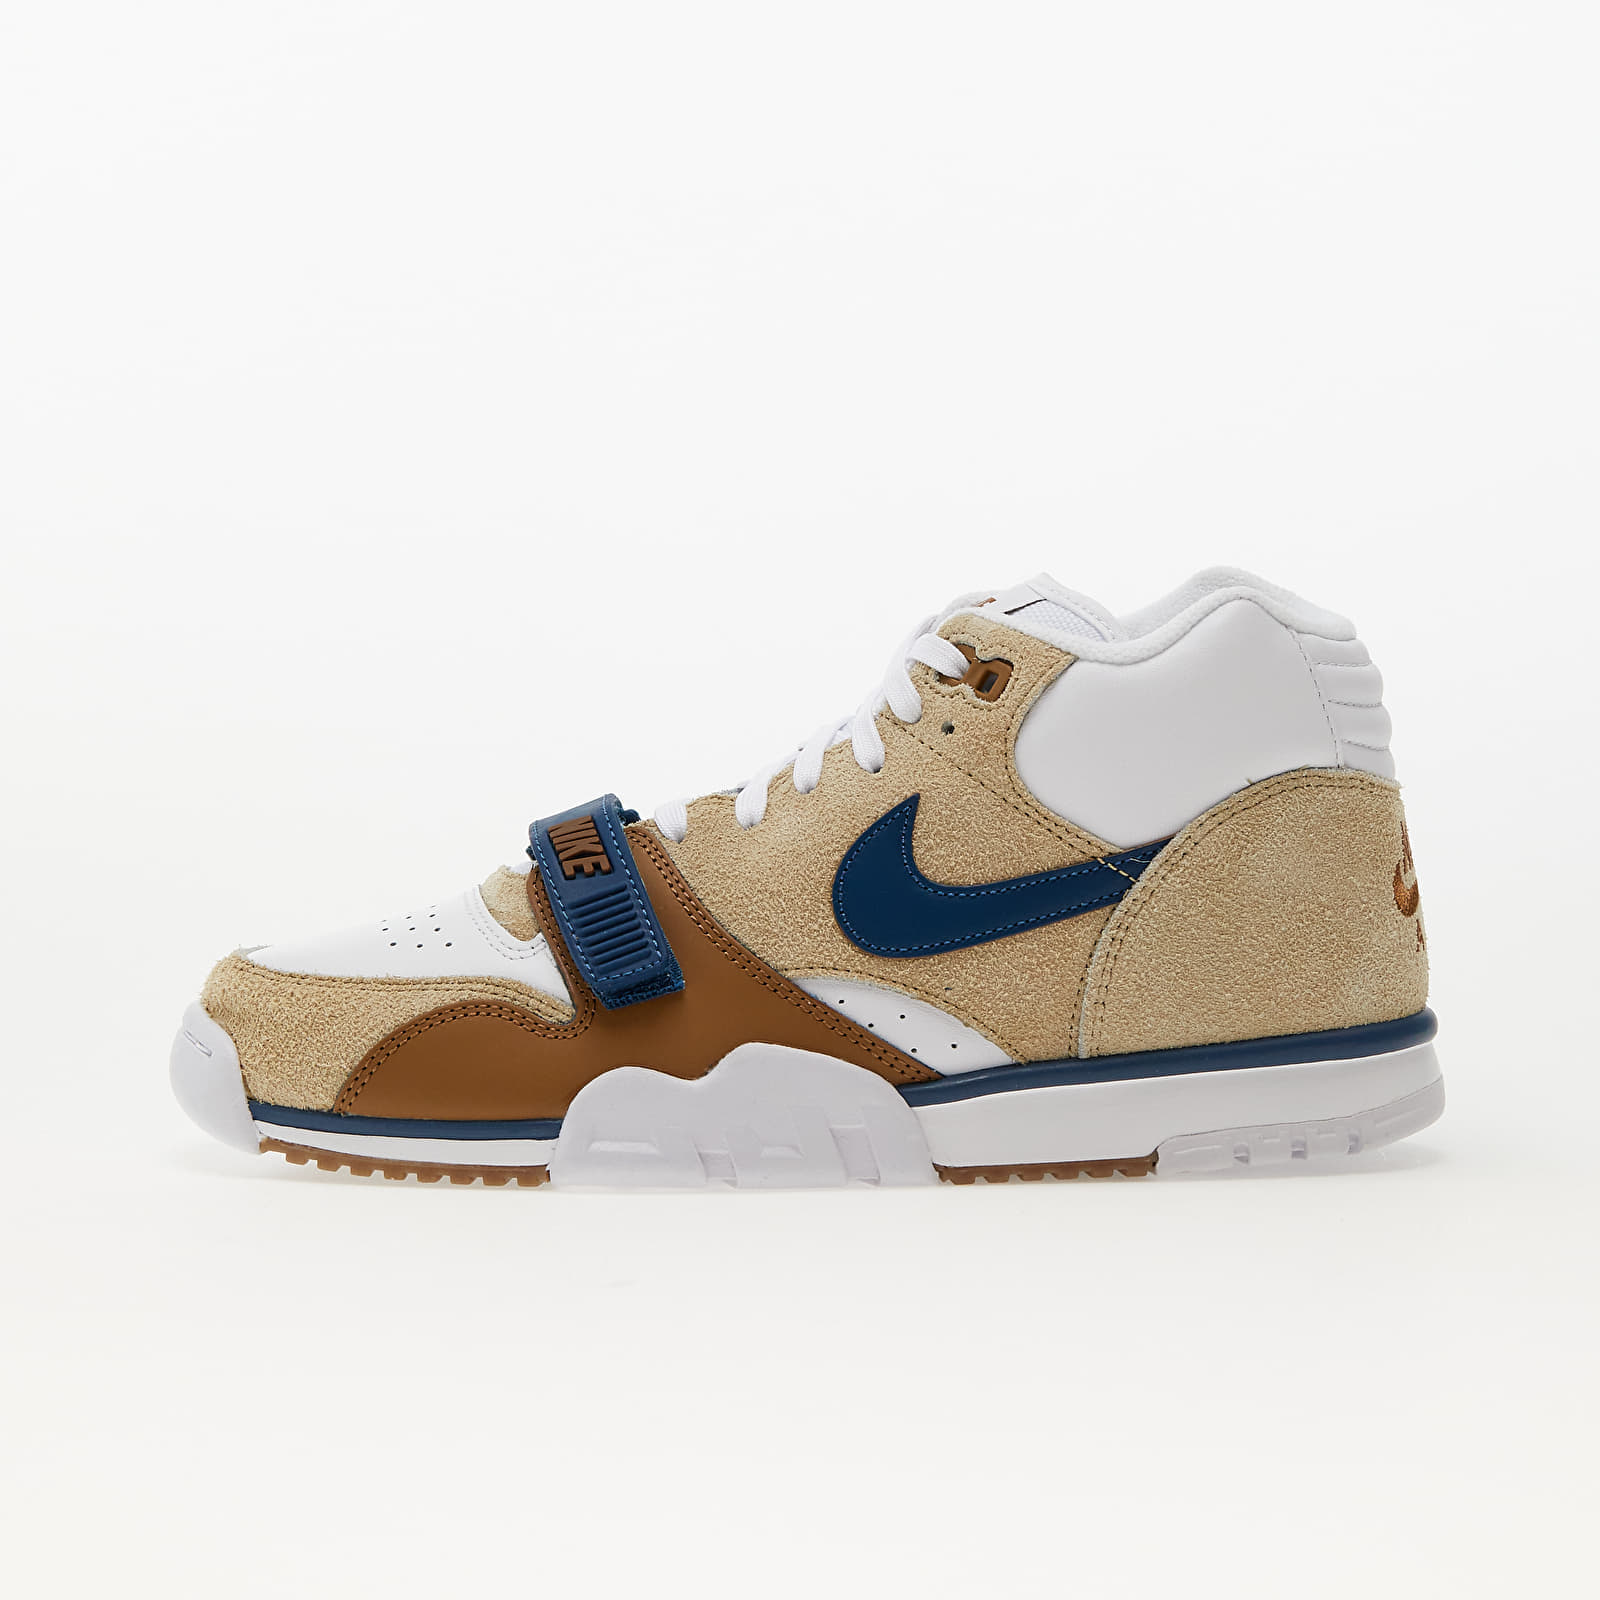 Adidași și pantofi pentru bărbați Nike Air Trainer 1 Limestone/ Valerian Blue-Ale Brown-White